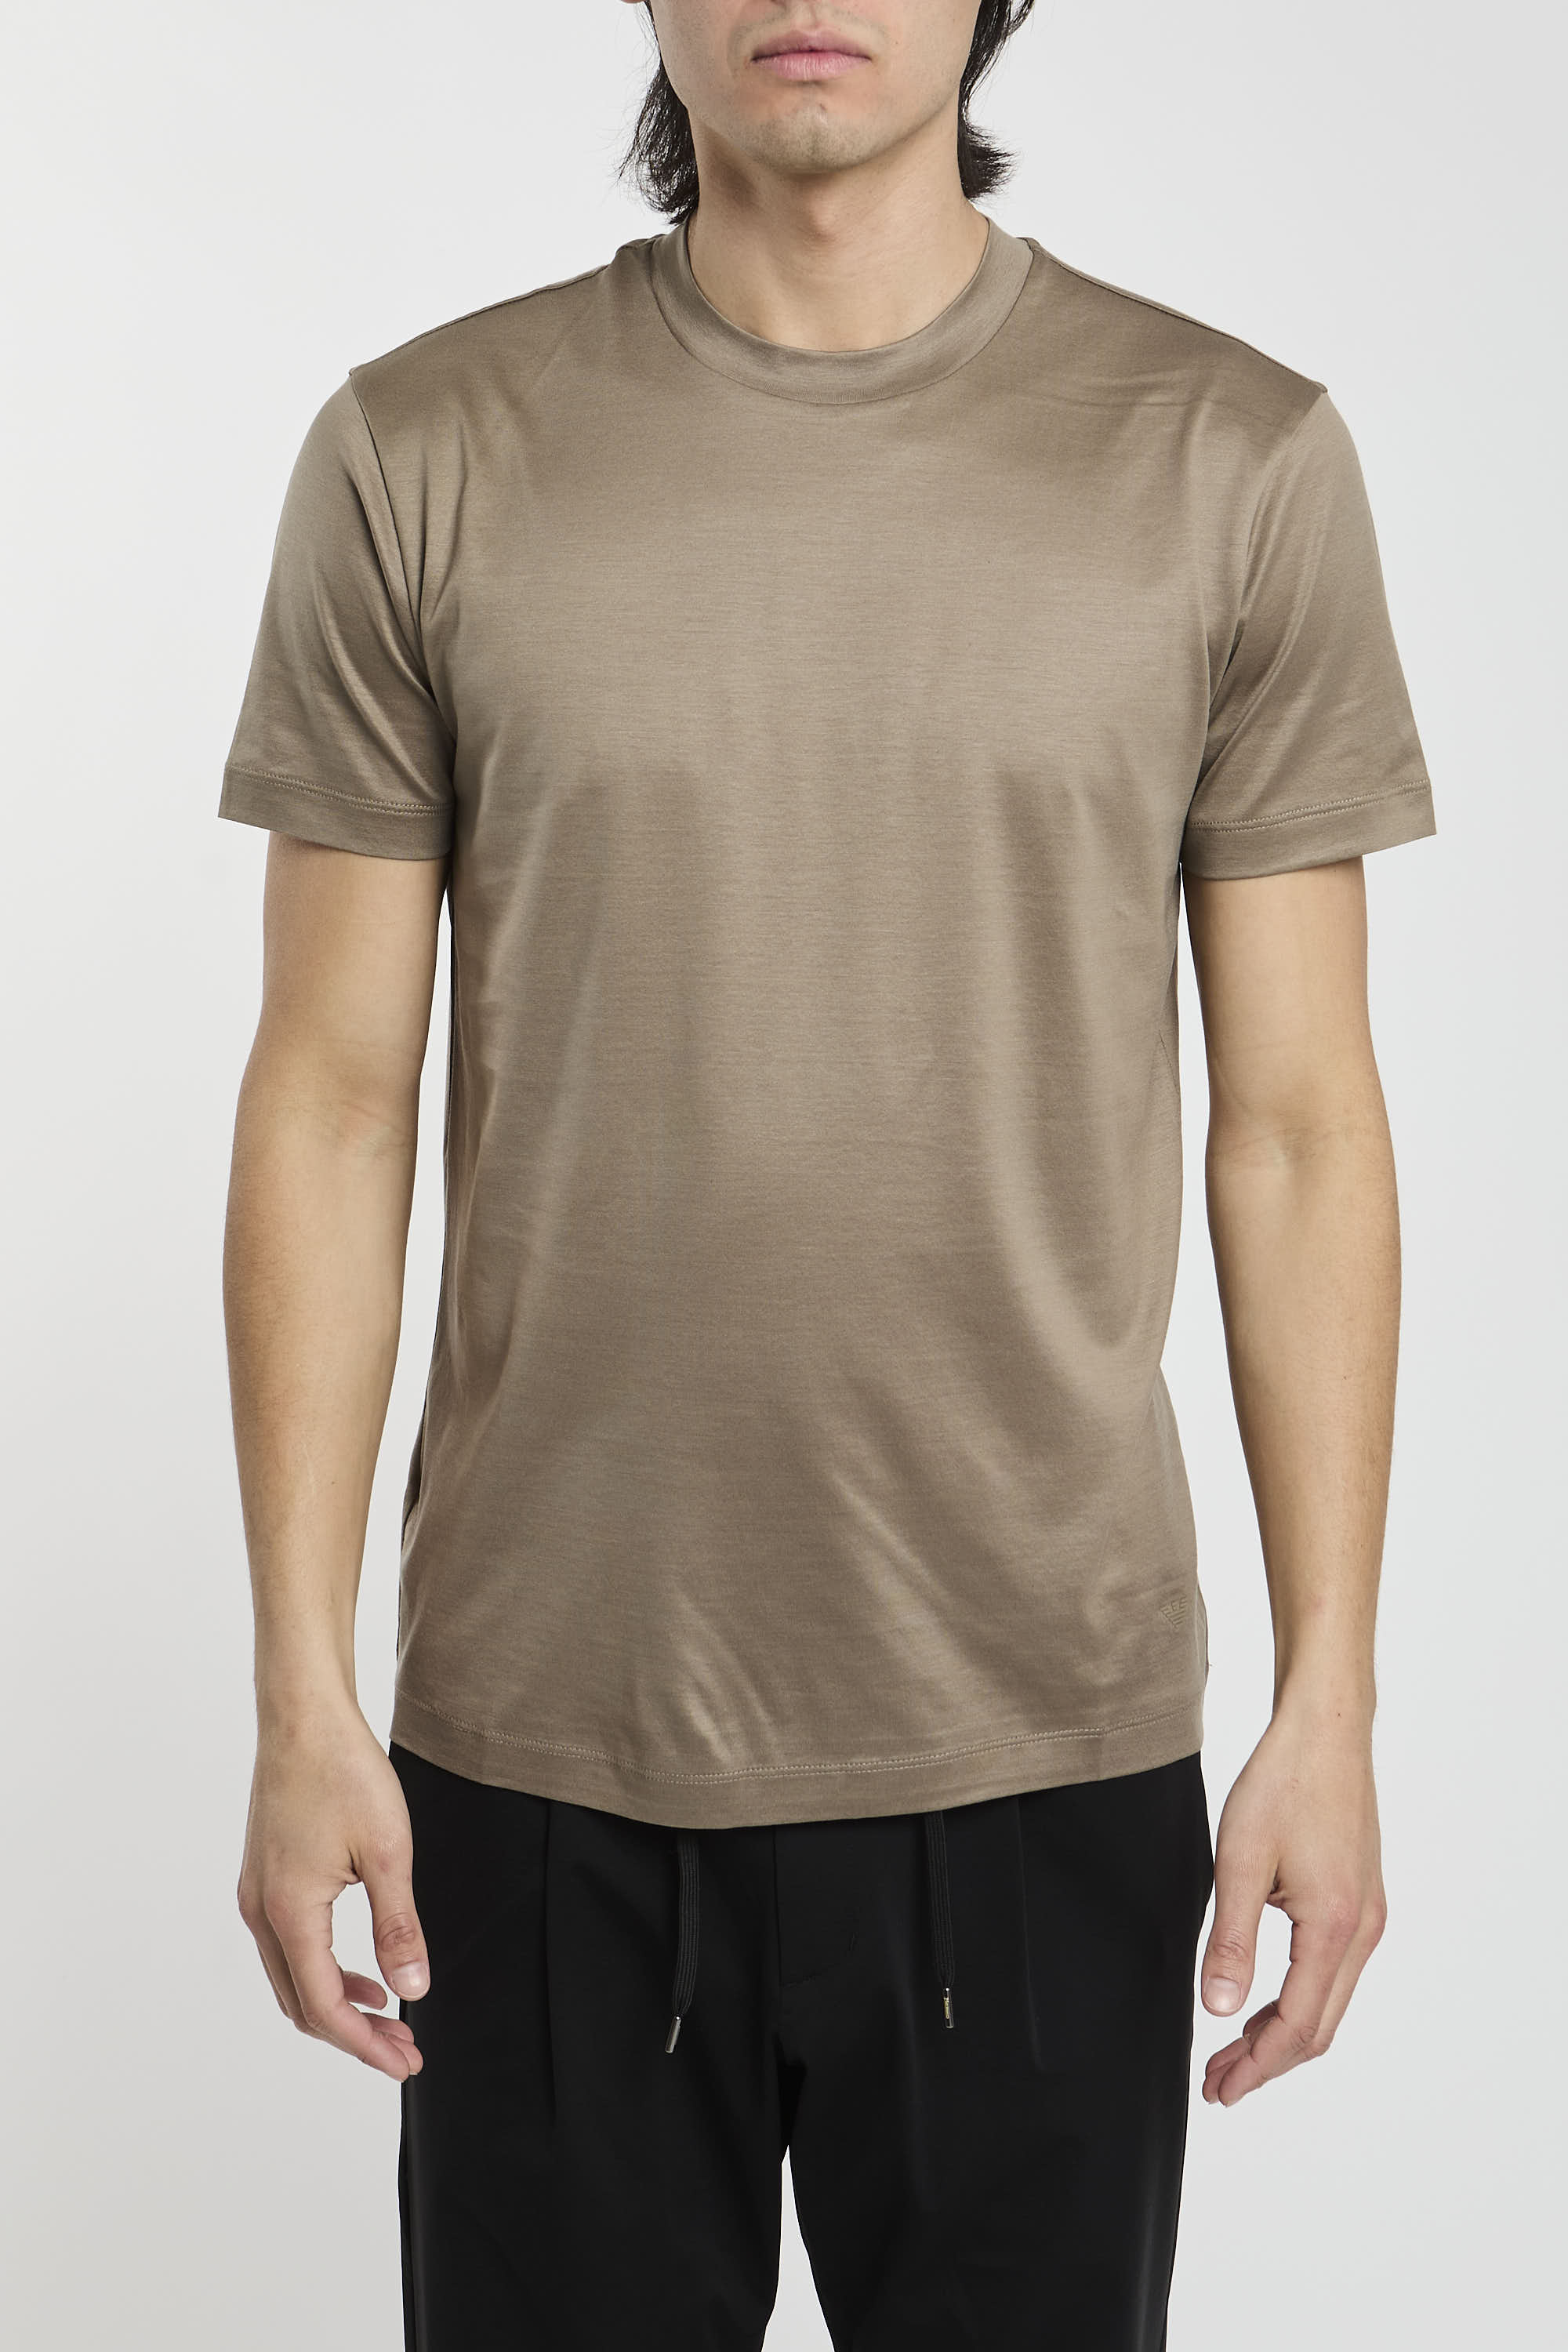 Emporio Armani T-shirt Mixed Lyocell/Cotton Brown-1